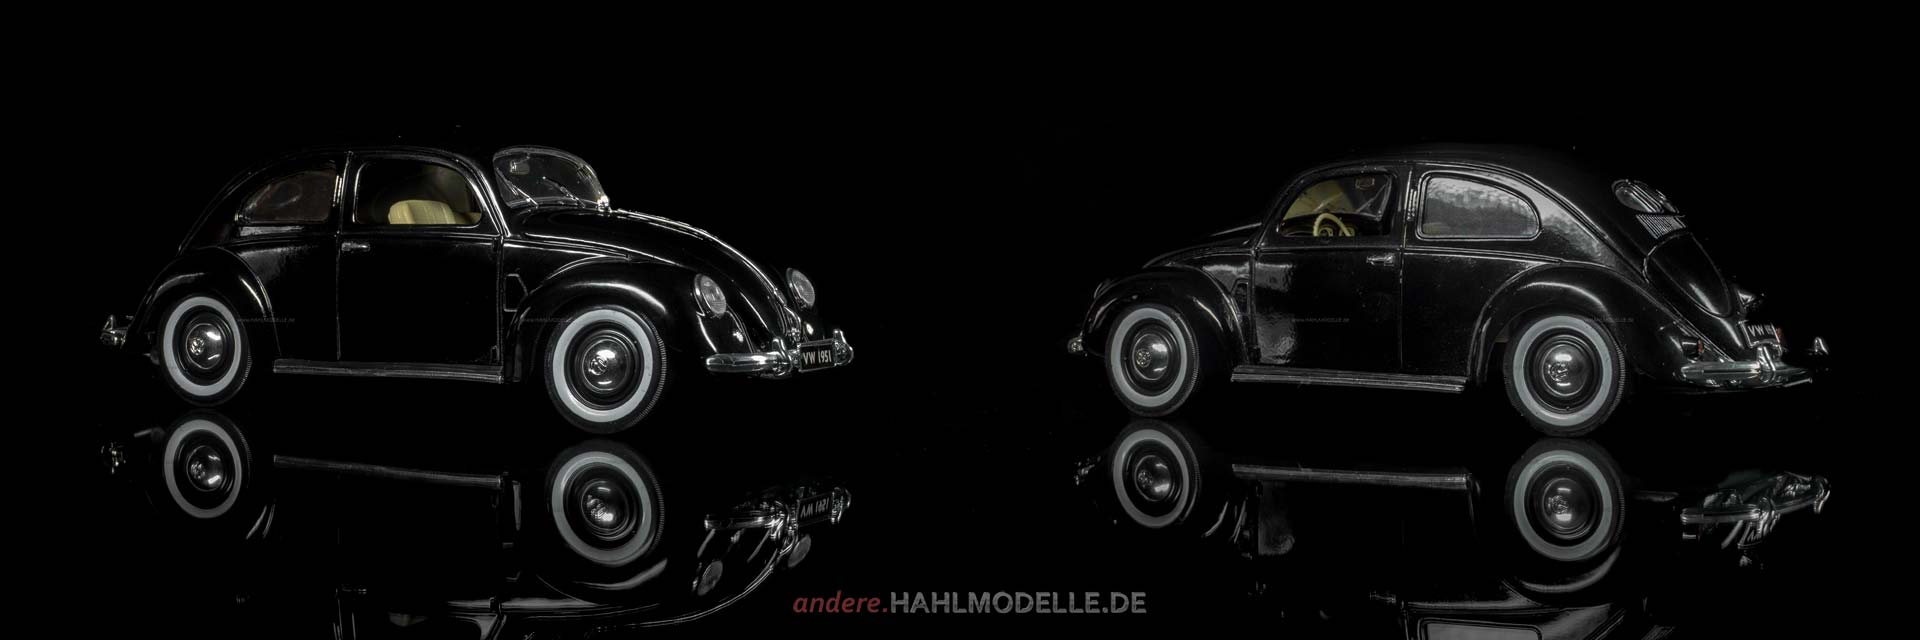 Volkswagen Käfer (Typ 11) | Limousine | Maisto | 1:18 | www.andere.hahlmodelle.de